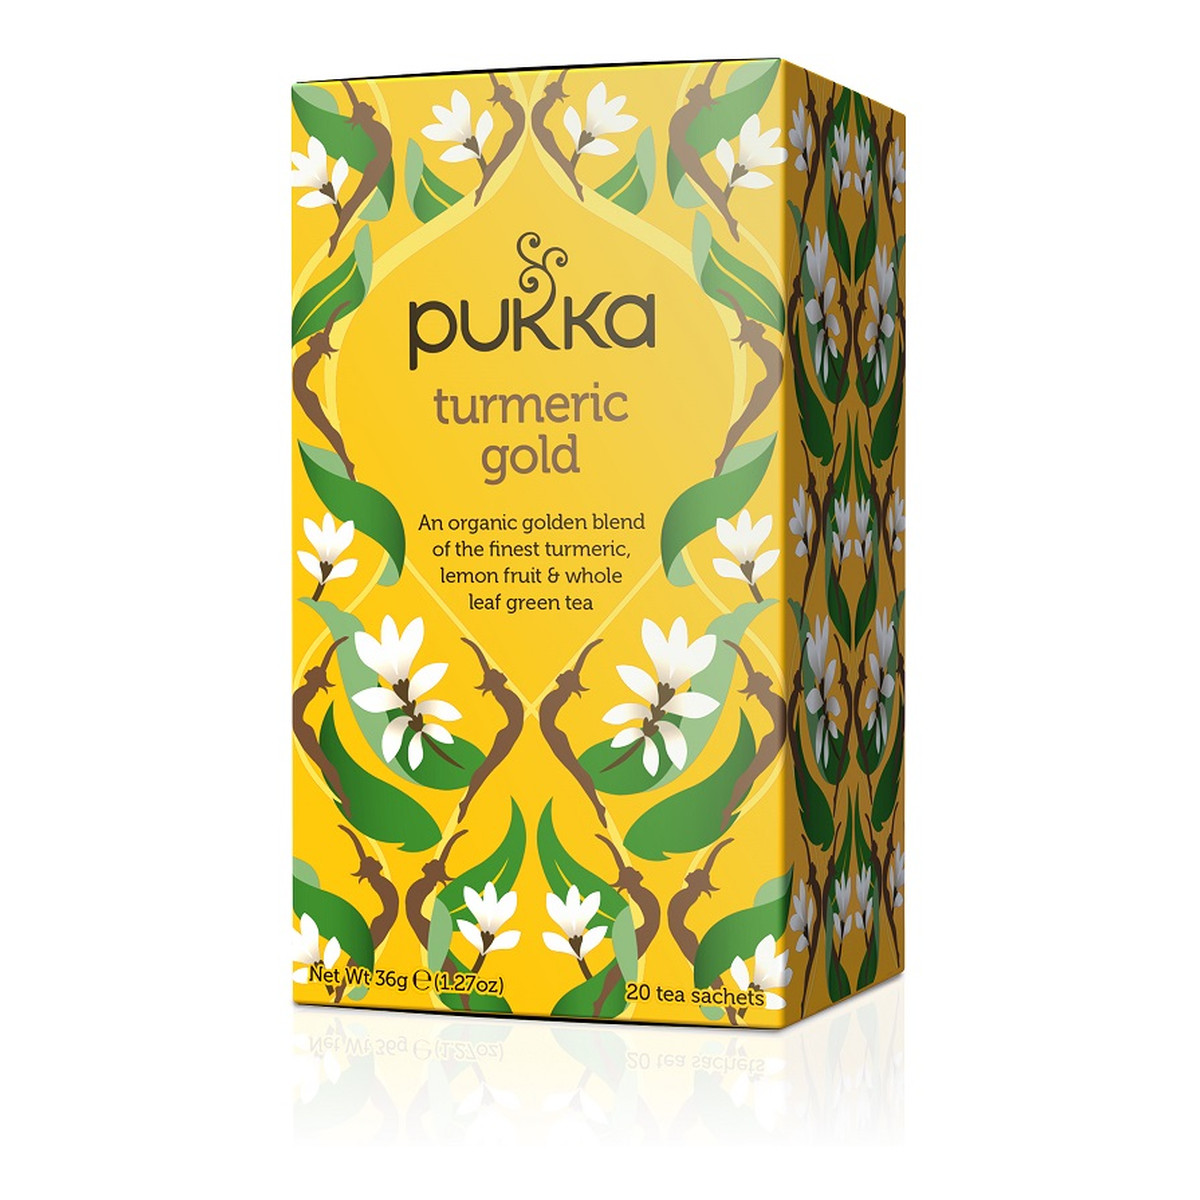 Pukka Turmeric gold organiczna herbatka z kurkumą i herbatą zieloną 20 torebek